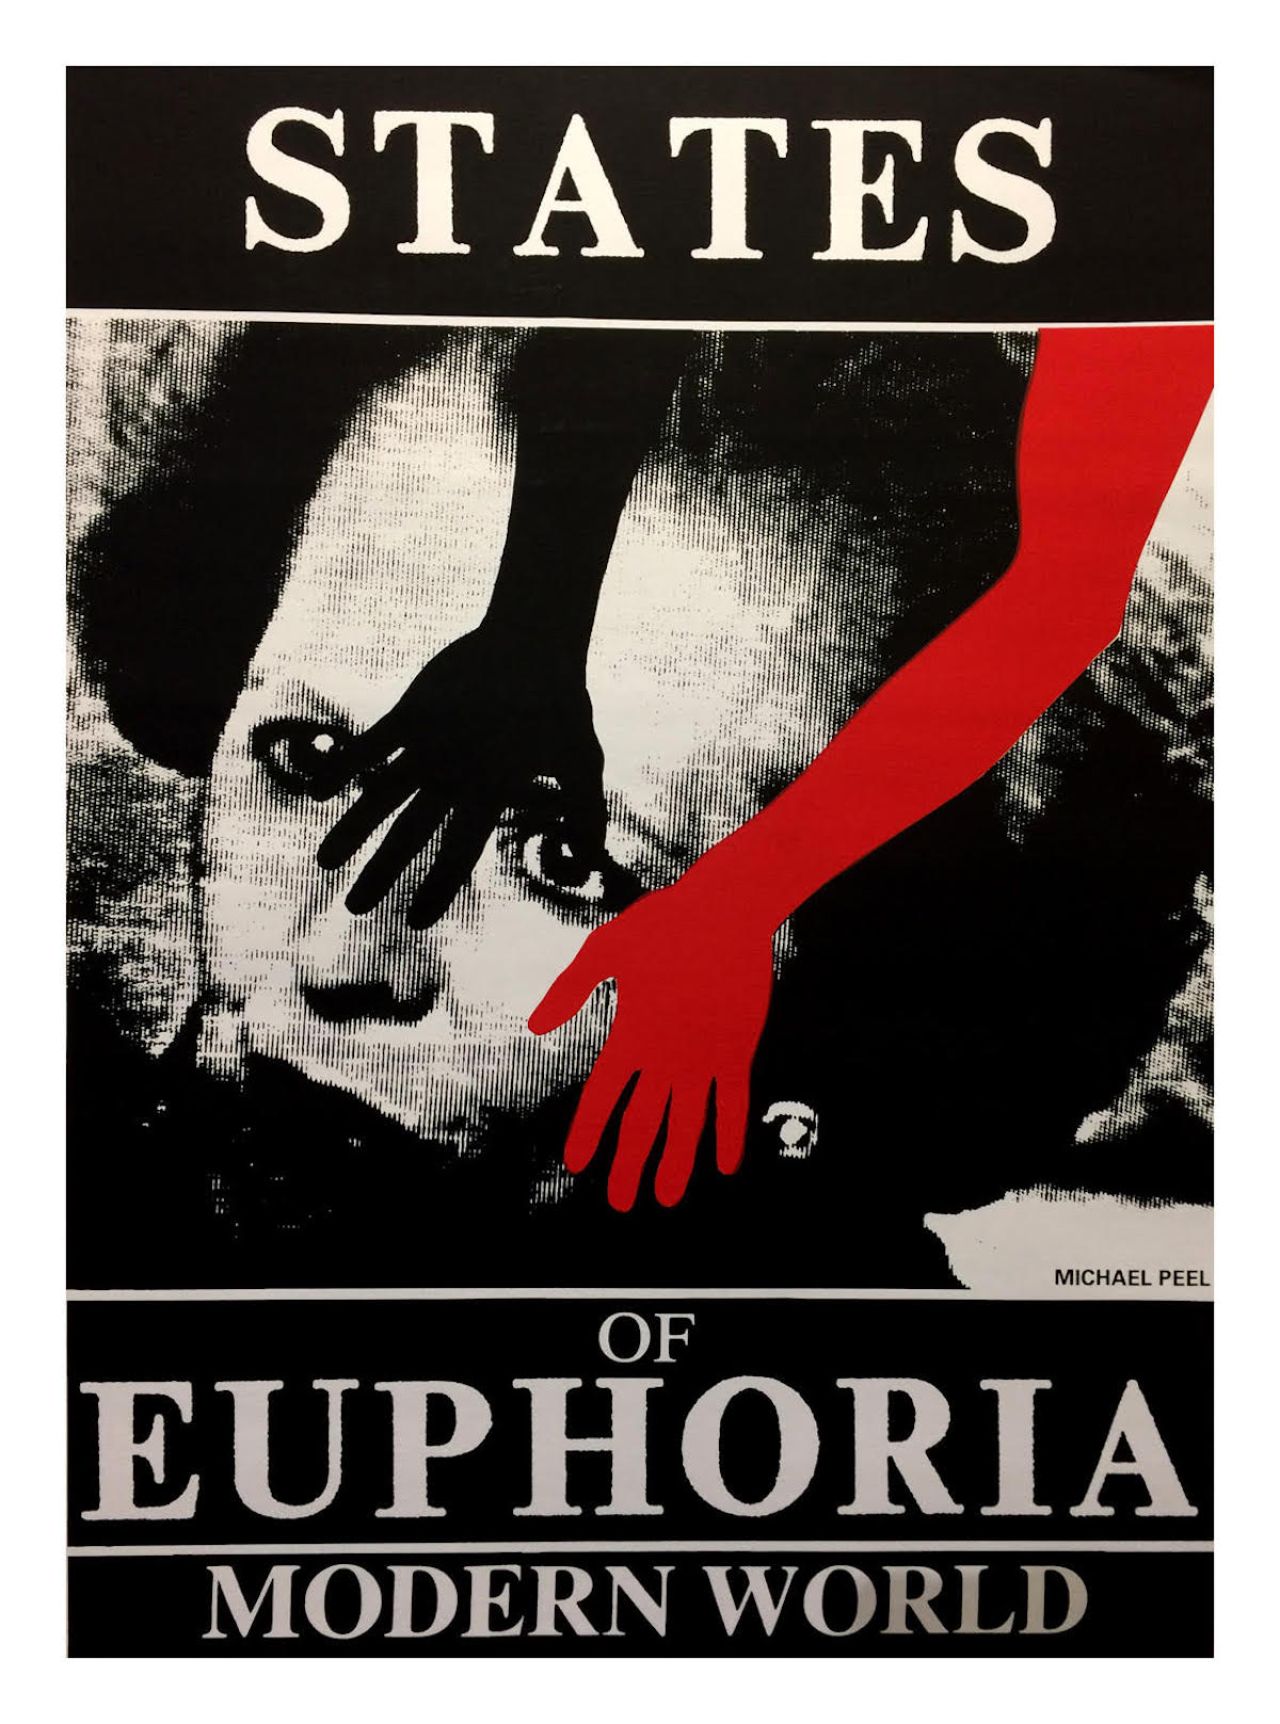 STATES of Euphoria (1986)